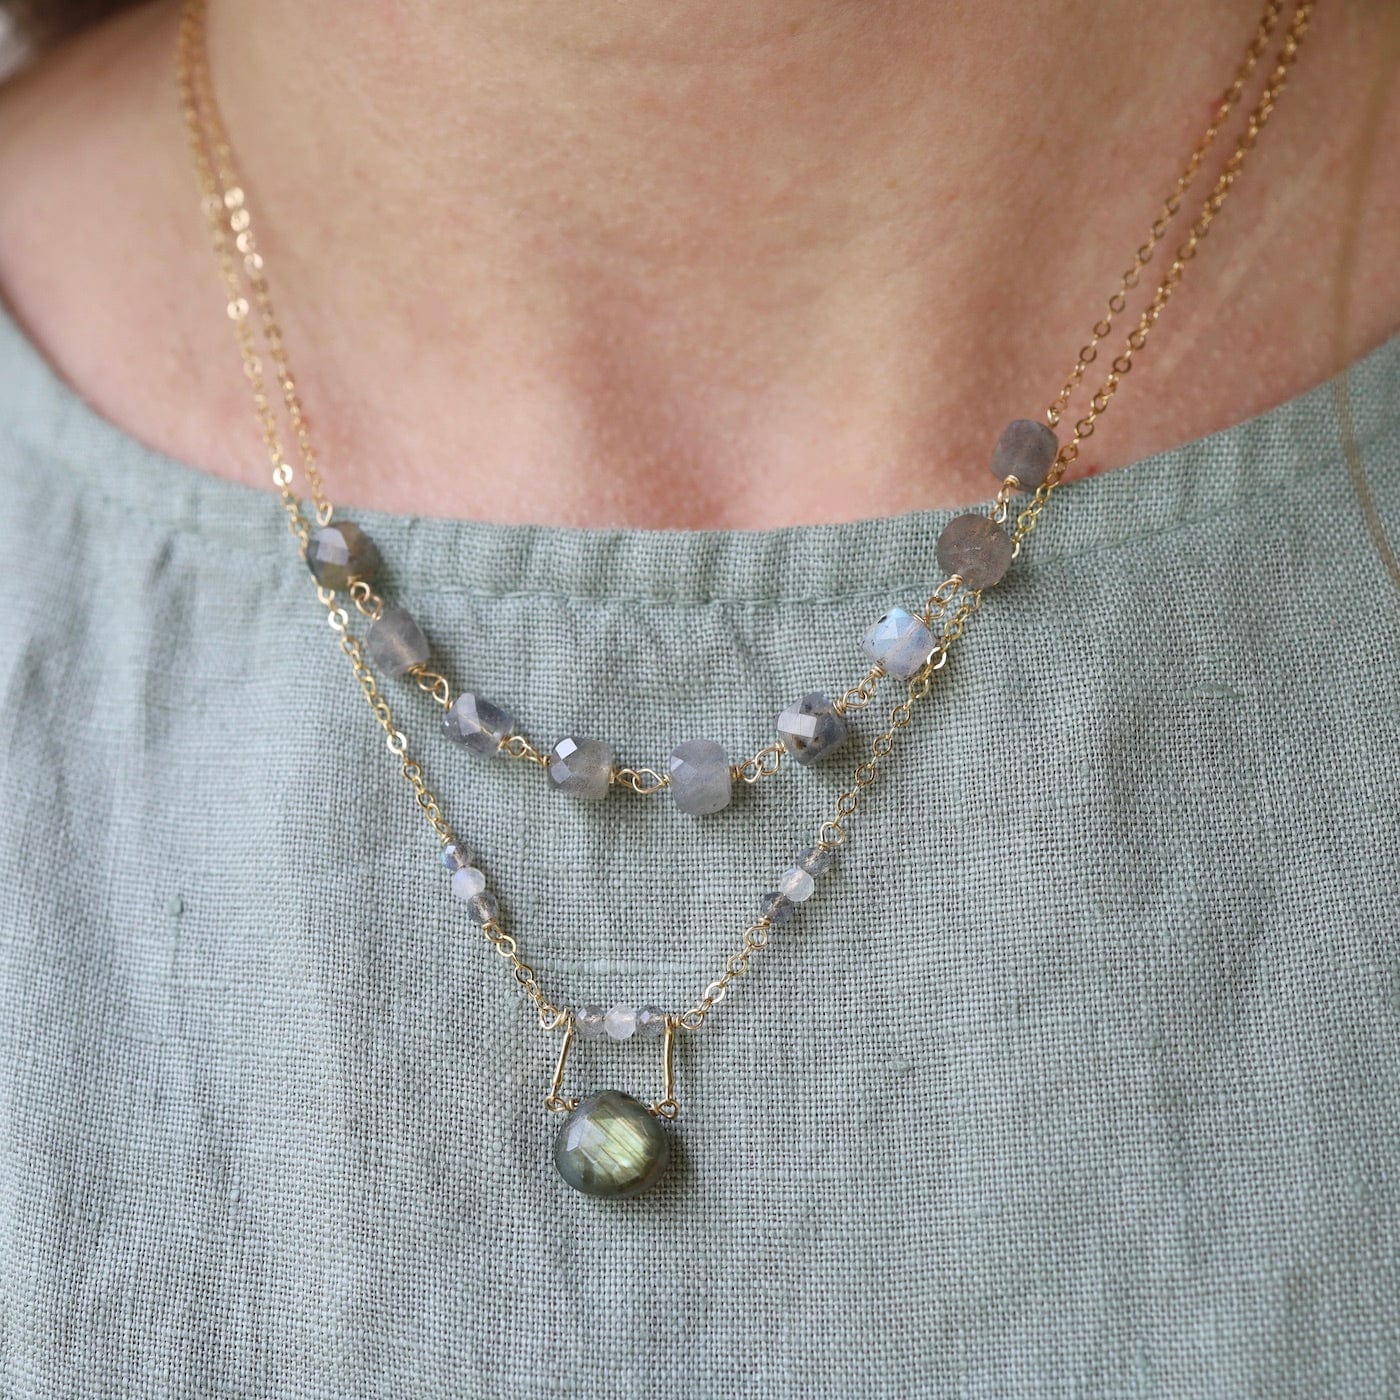 NKL-GF Labradorite Handmade Bead Chain Necklace